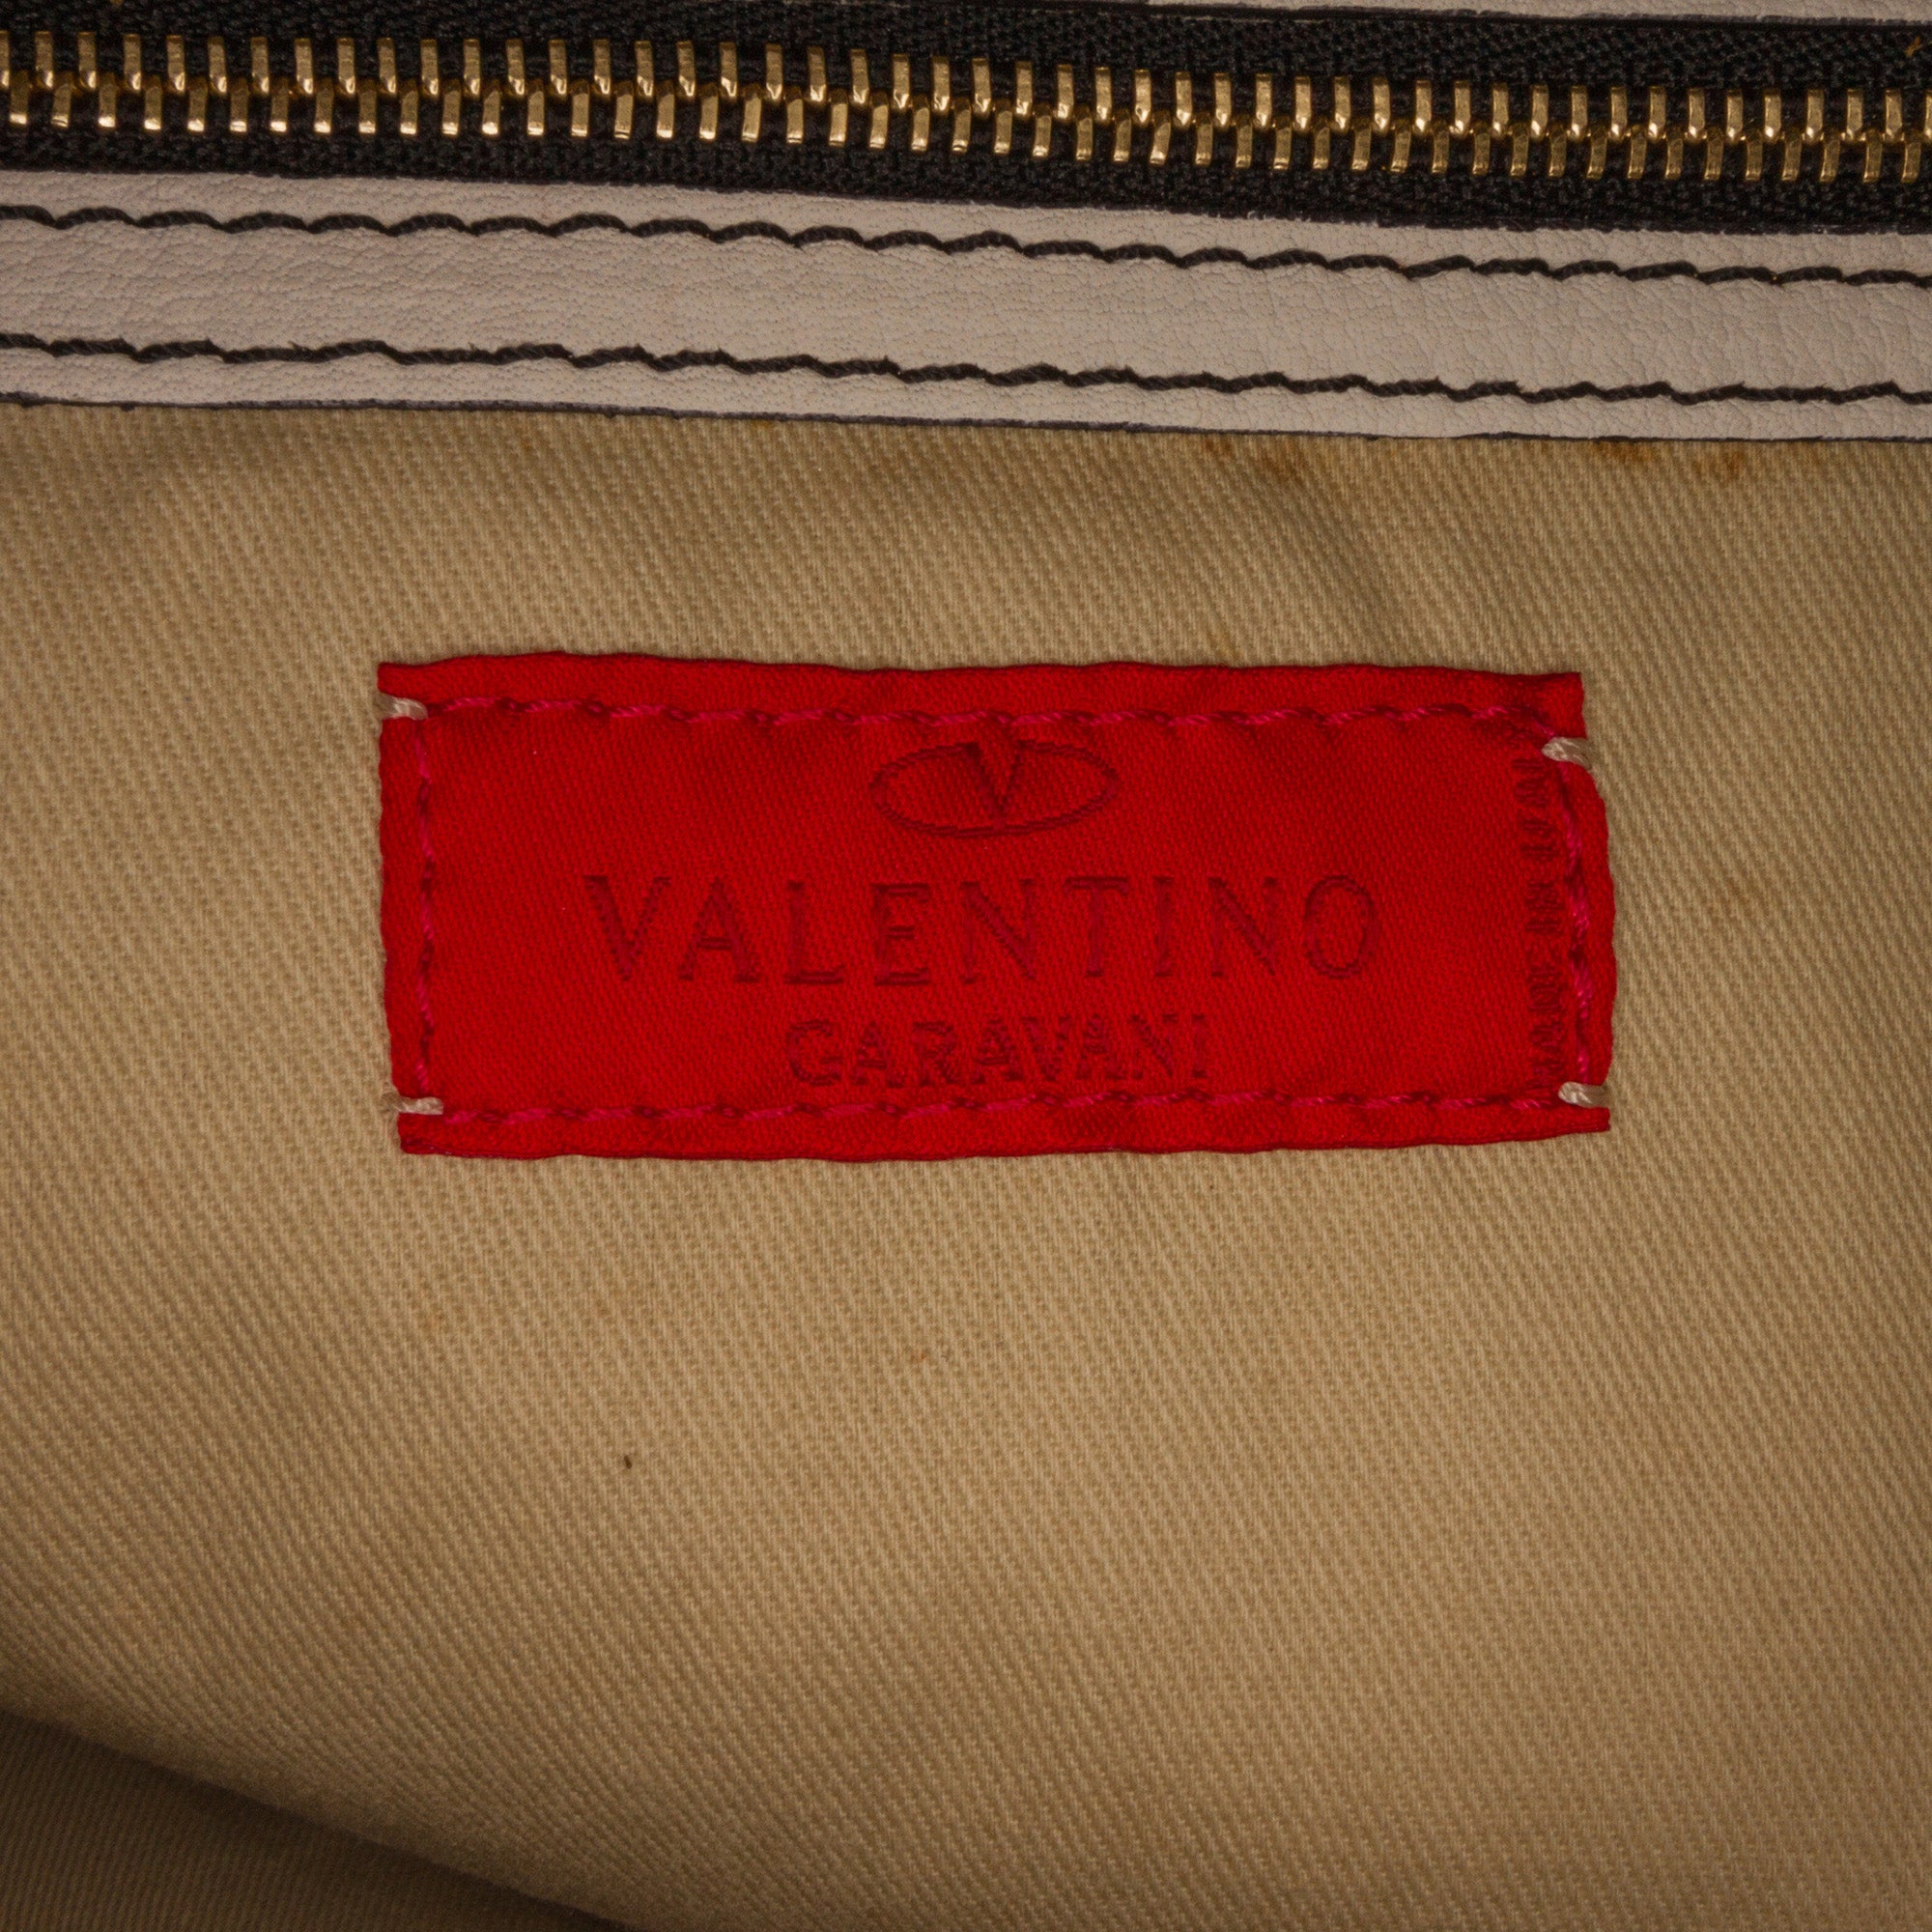 White Valentino Leather Boston Bag